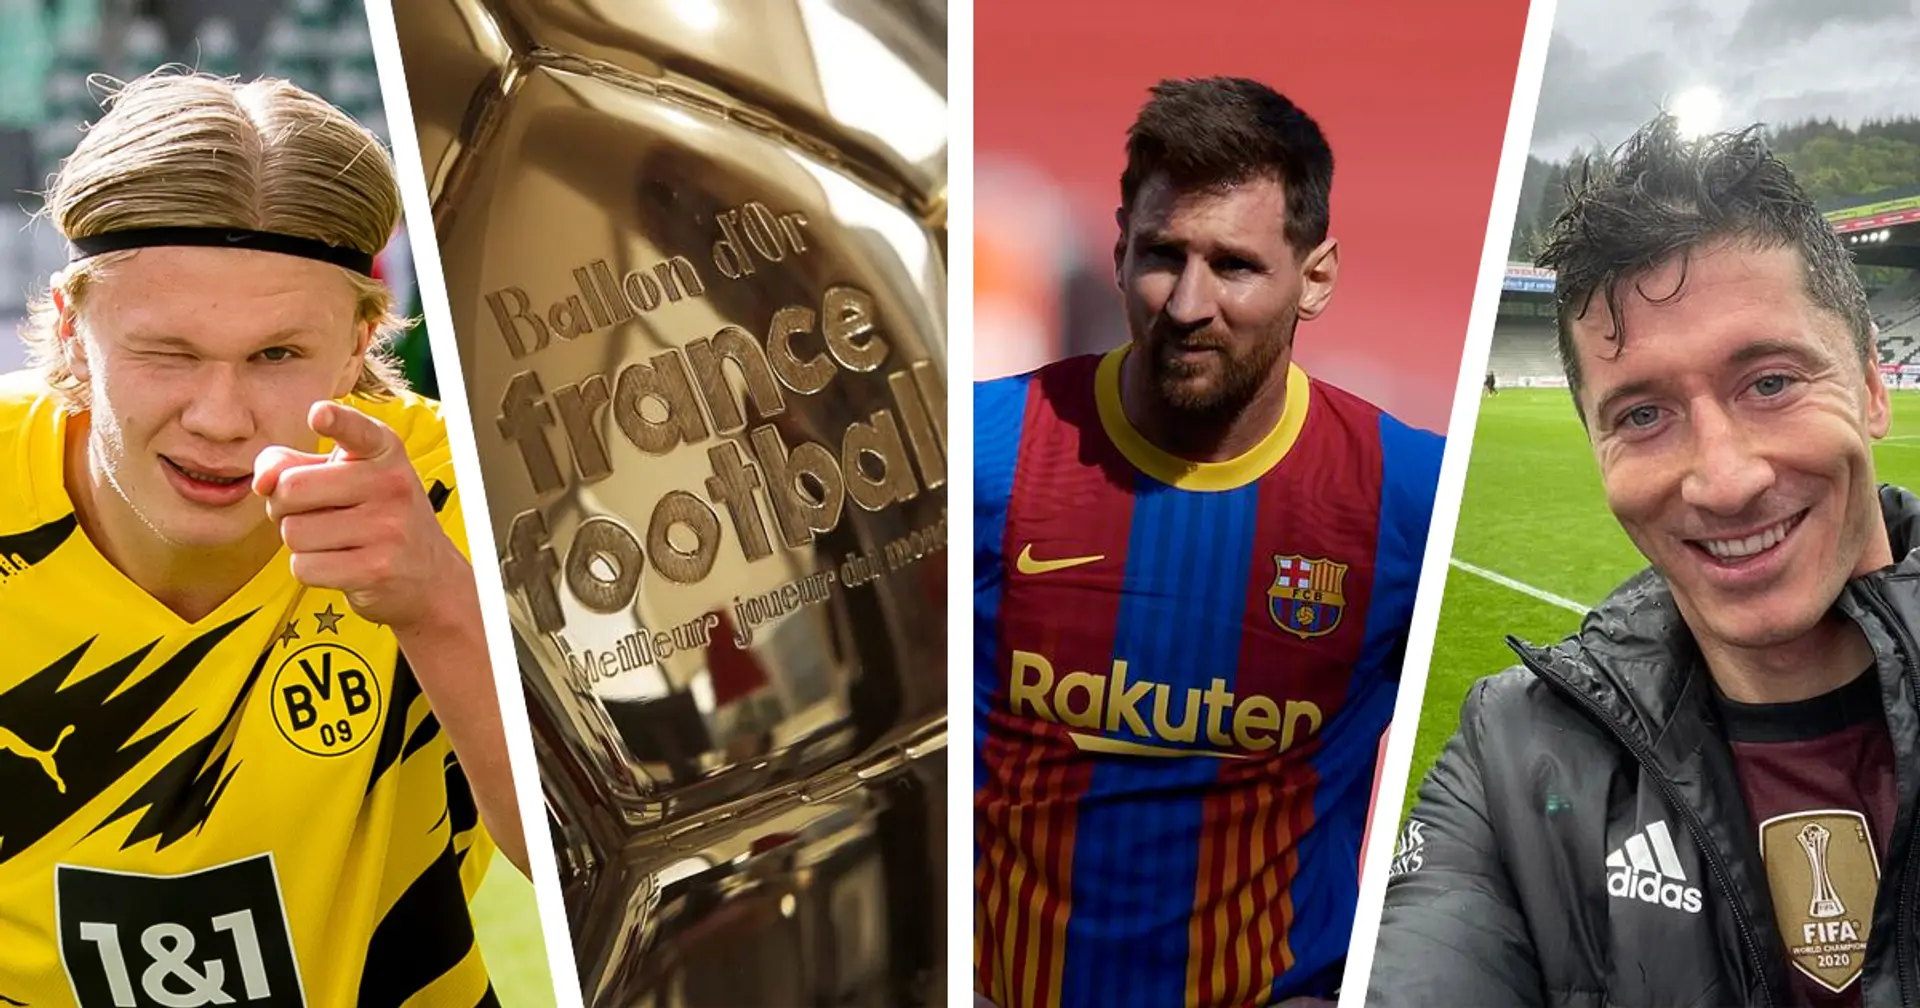 Ballon d'Or power rankings: Lewandowski jumps over Messi to reclaim top spot